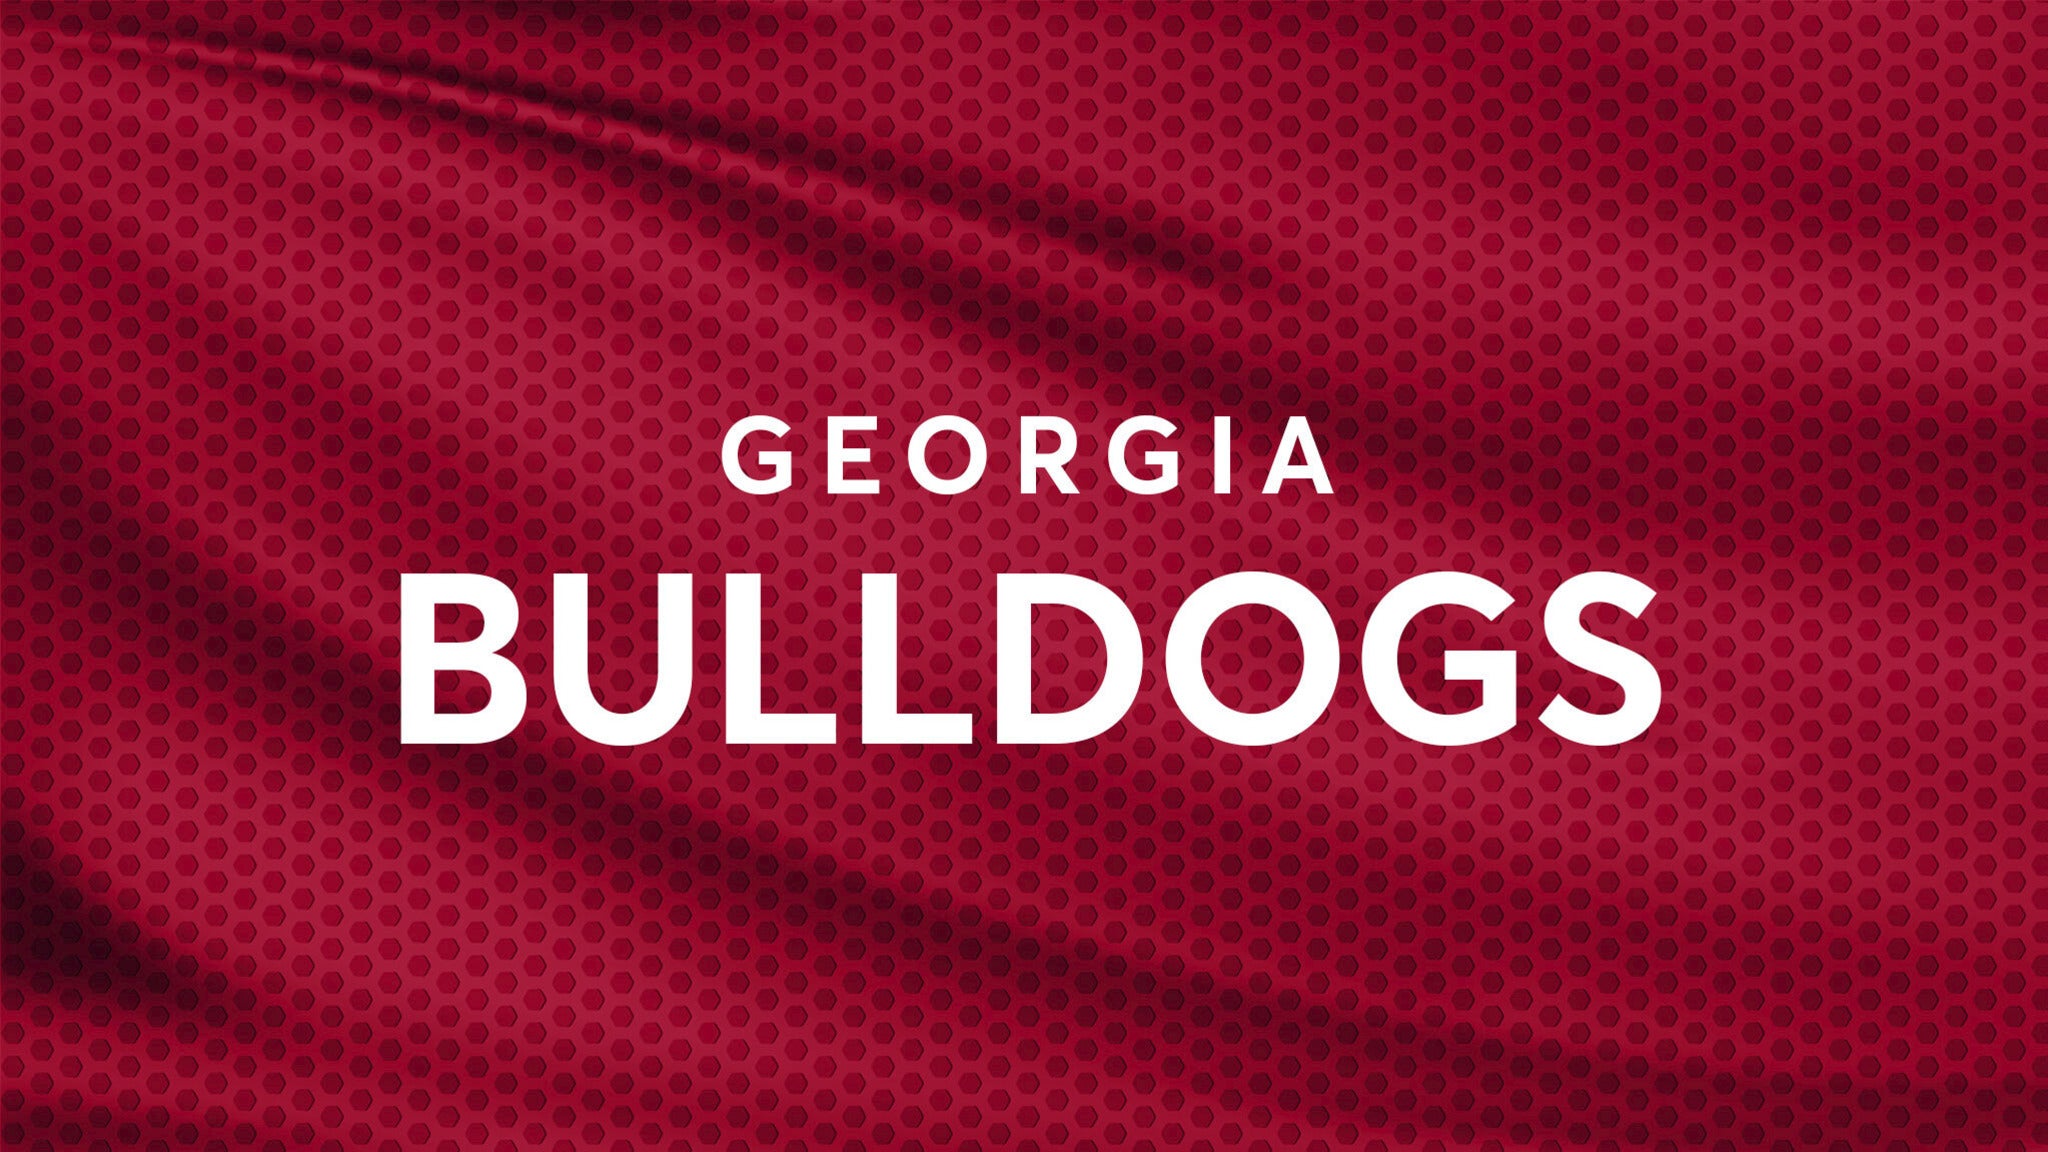 Georgia Bulldogs Football vs. Vanderbilt Commodores Football